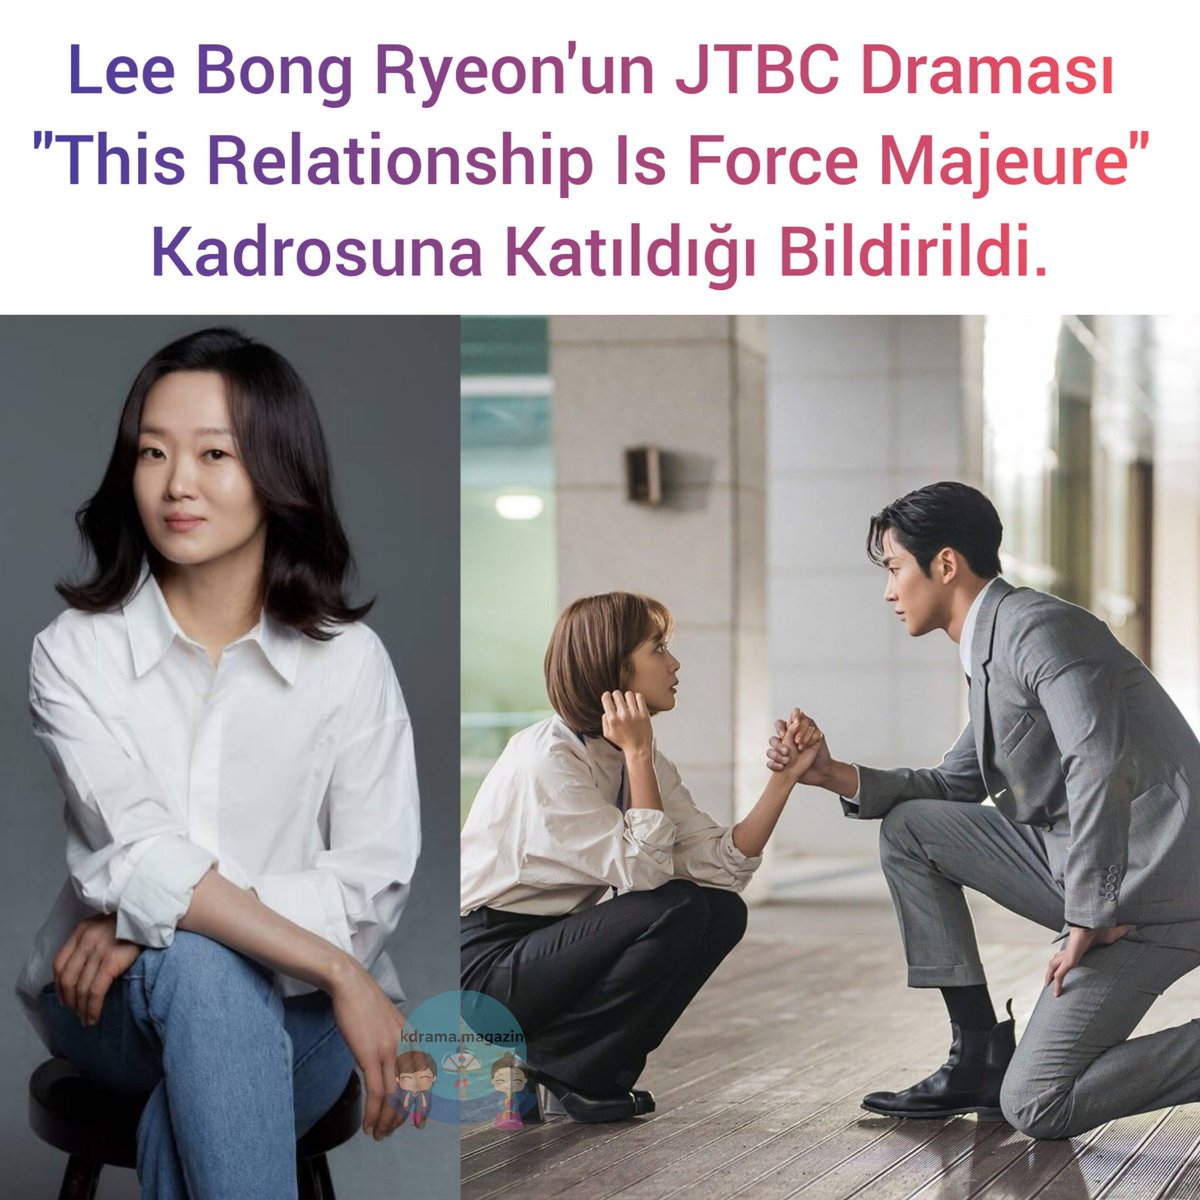 #LeeBongRyeon'un JTBC Draması #ThisRelationshipIsForceMajeure Kadrosuna Katıldığı Bildirildi.

#ThisRelationshipIsIrresistible #Rowoon #JoBoAh #Yura #HaJoon #JungHyeYoung #ParkKyungHye